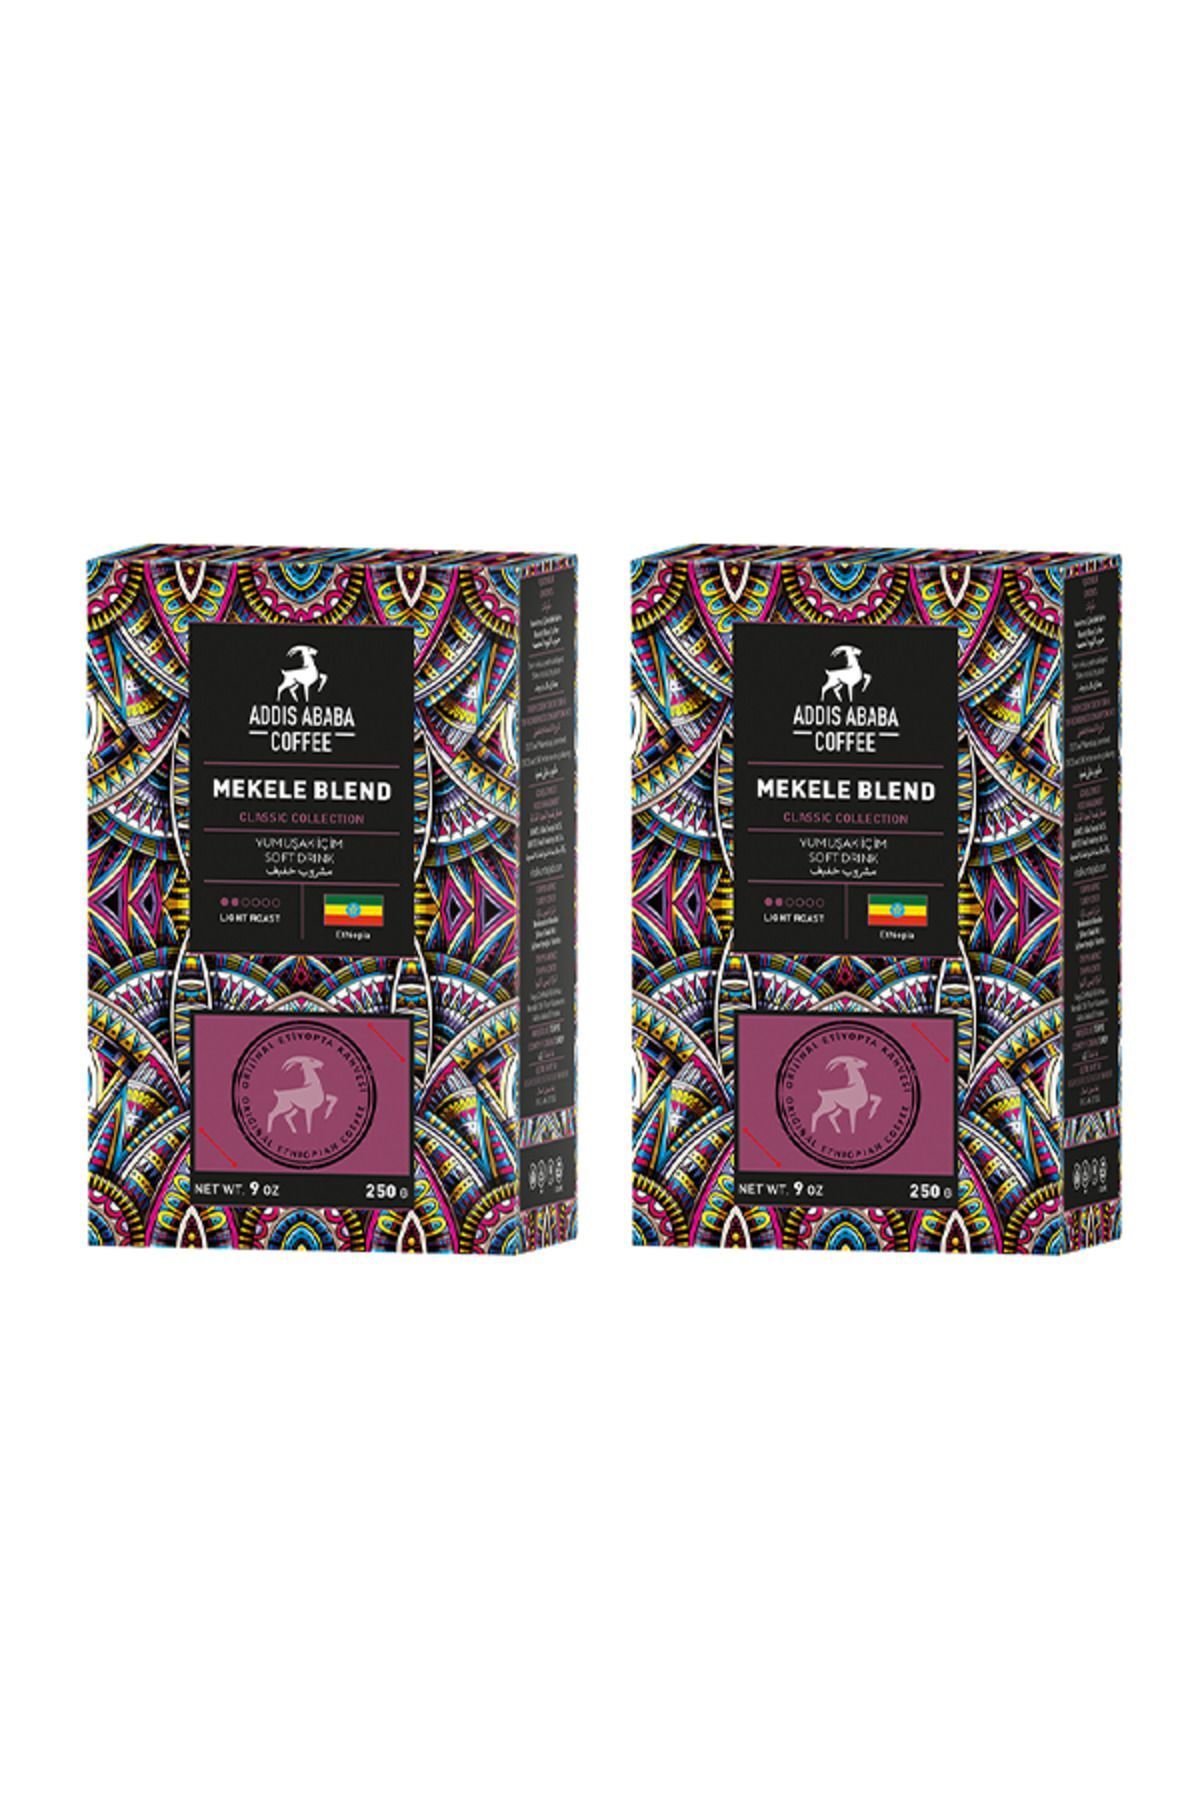 Addis Ababa Coffee Mekele Blend (meyvemsi) Avantajlı Paket 2 Ad. X 250 Gr. (500 Gr.)